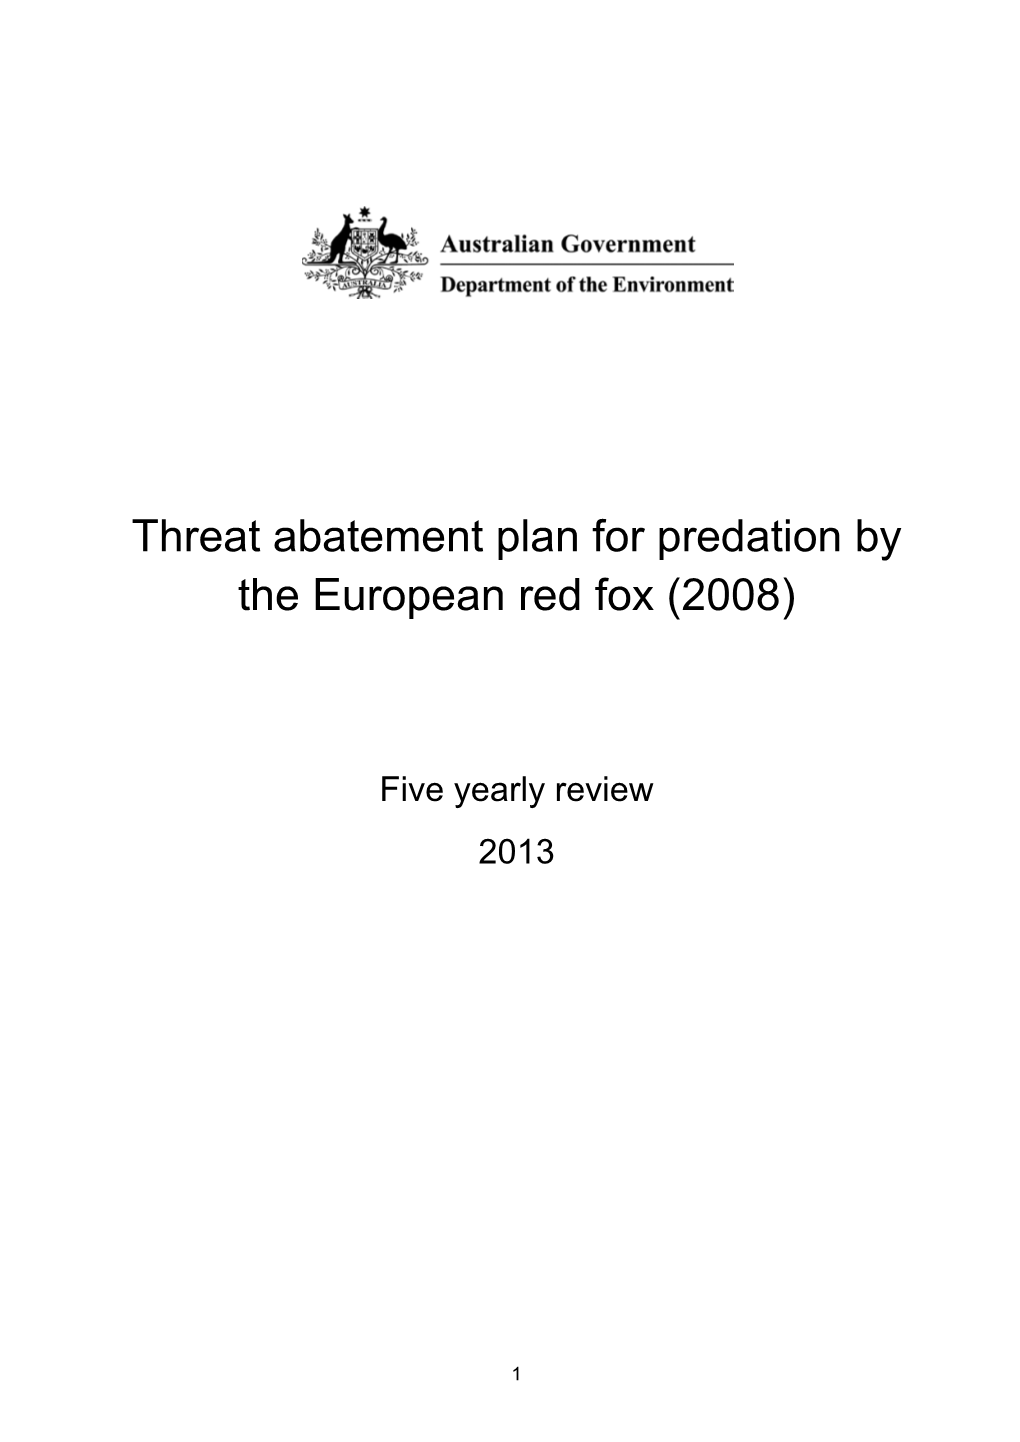 Threat Abatement Plan for Predation by the European Red Fox (2008)